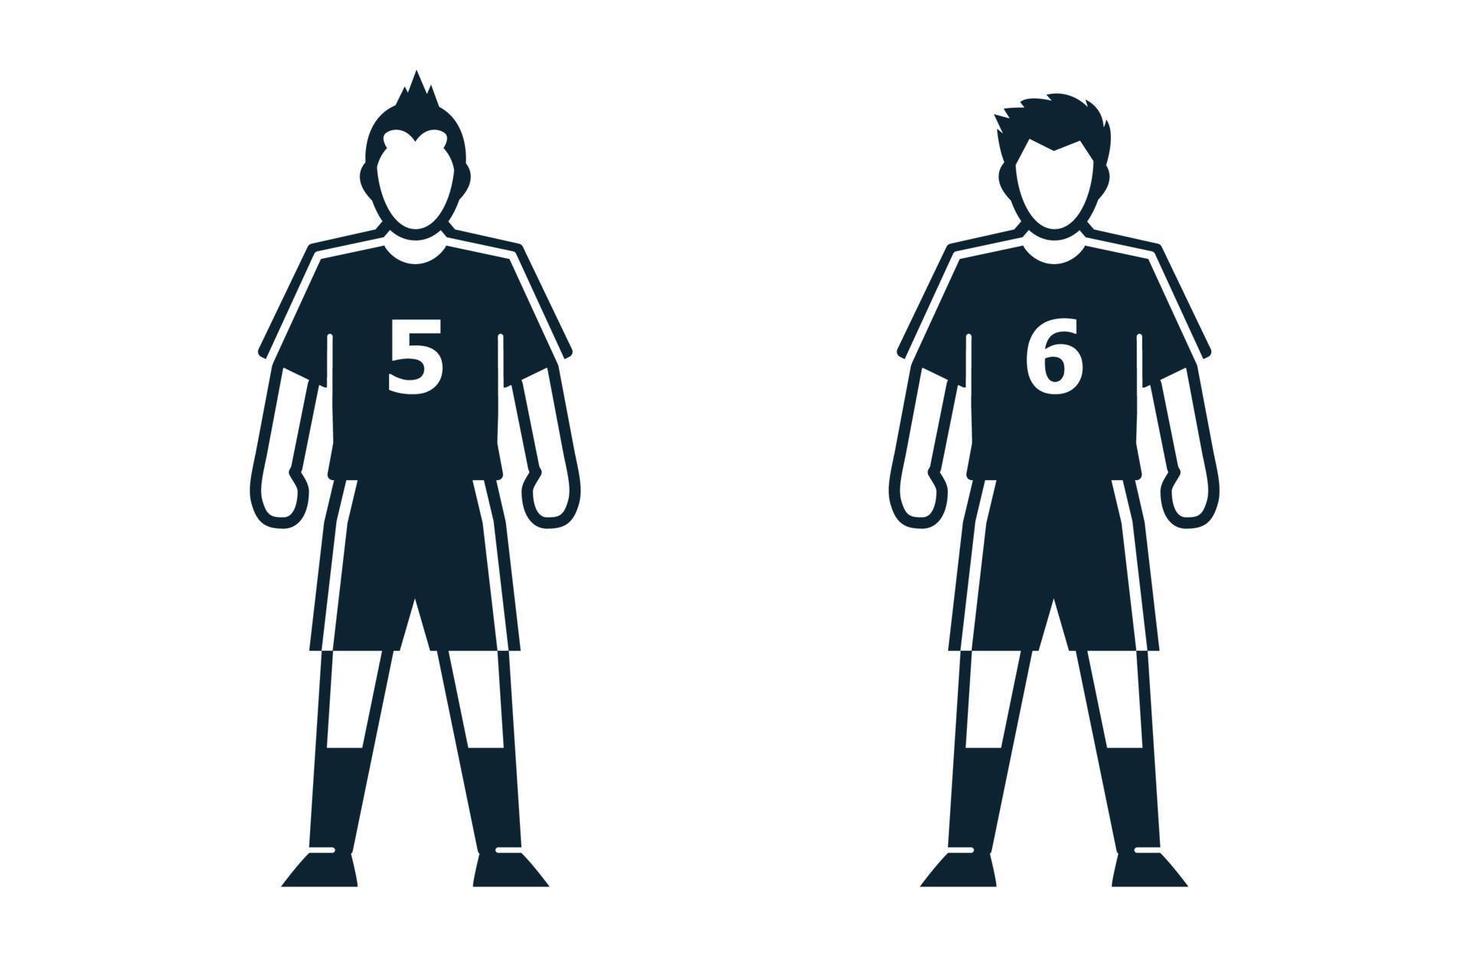 voetballer, mensen en kleding pictogrammen met witte achtergrond vector